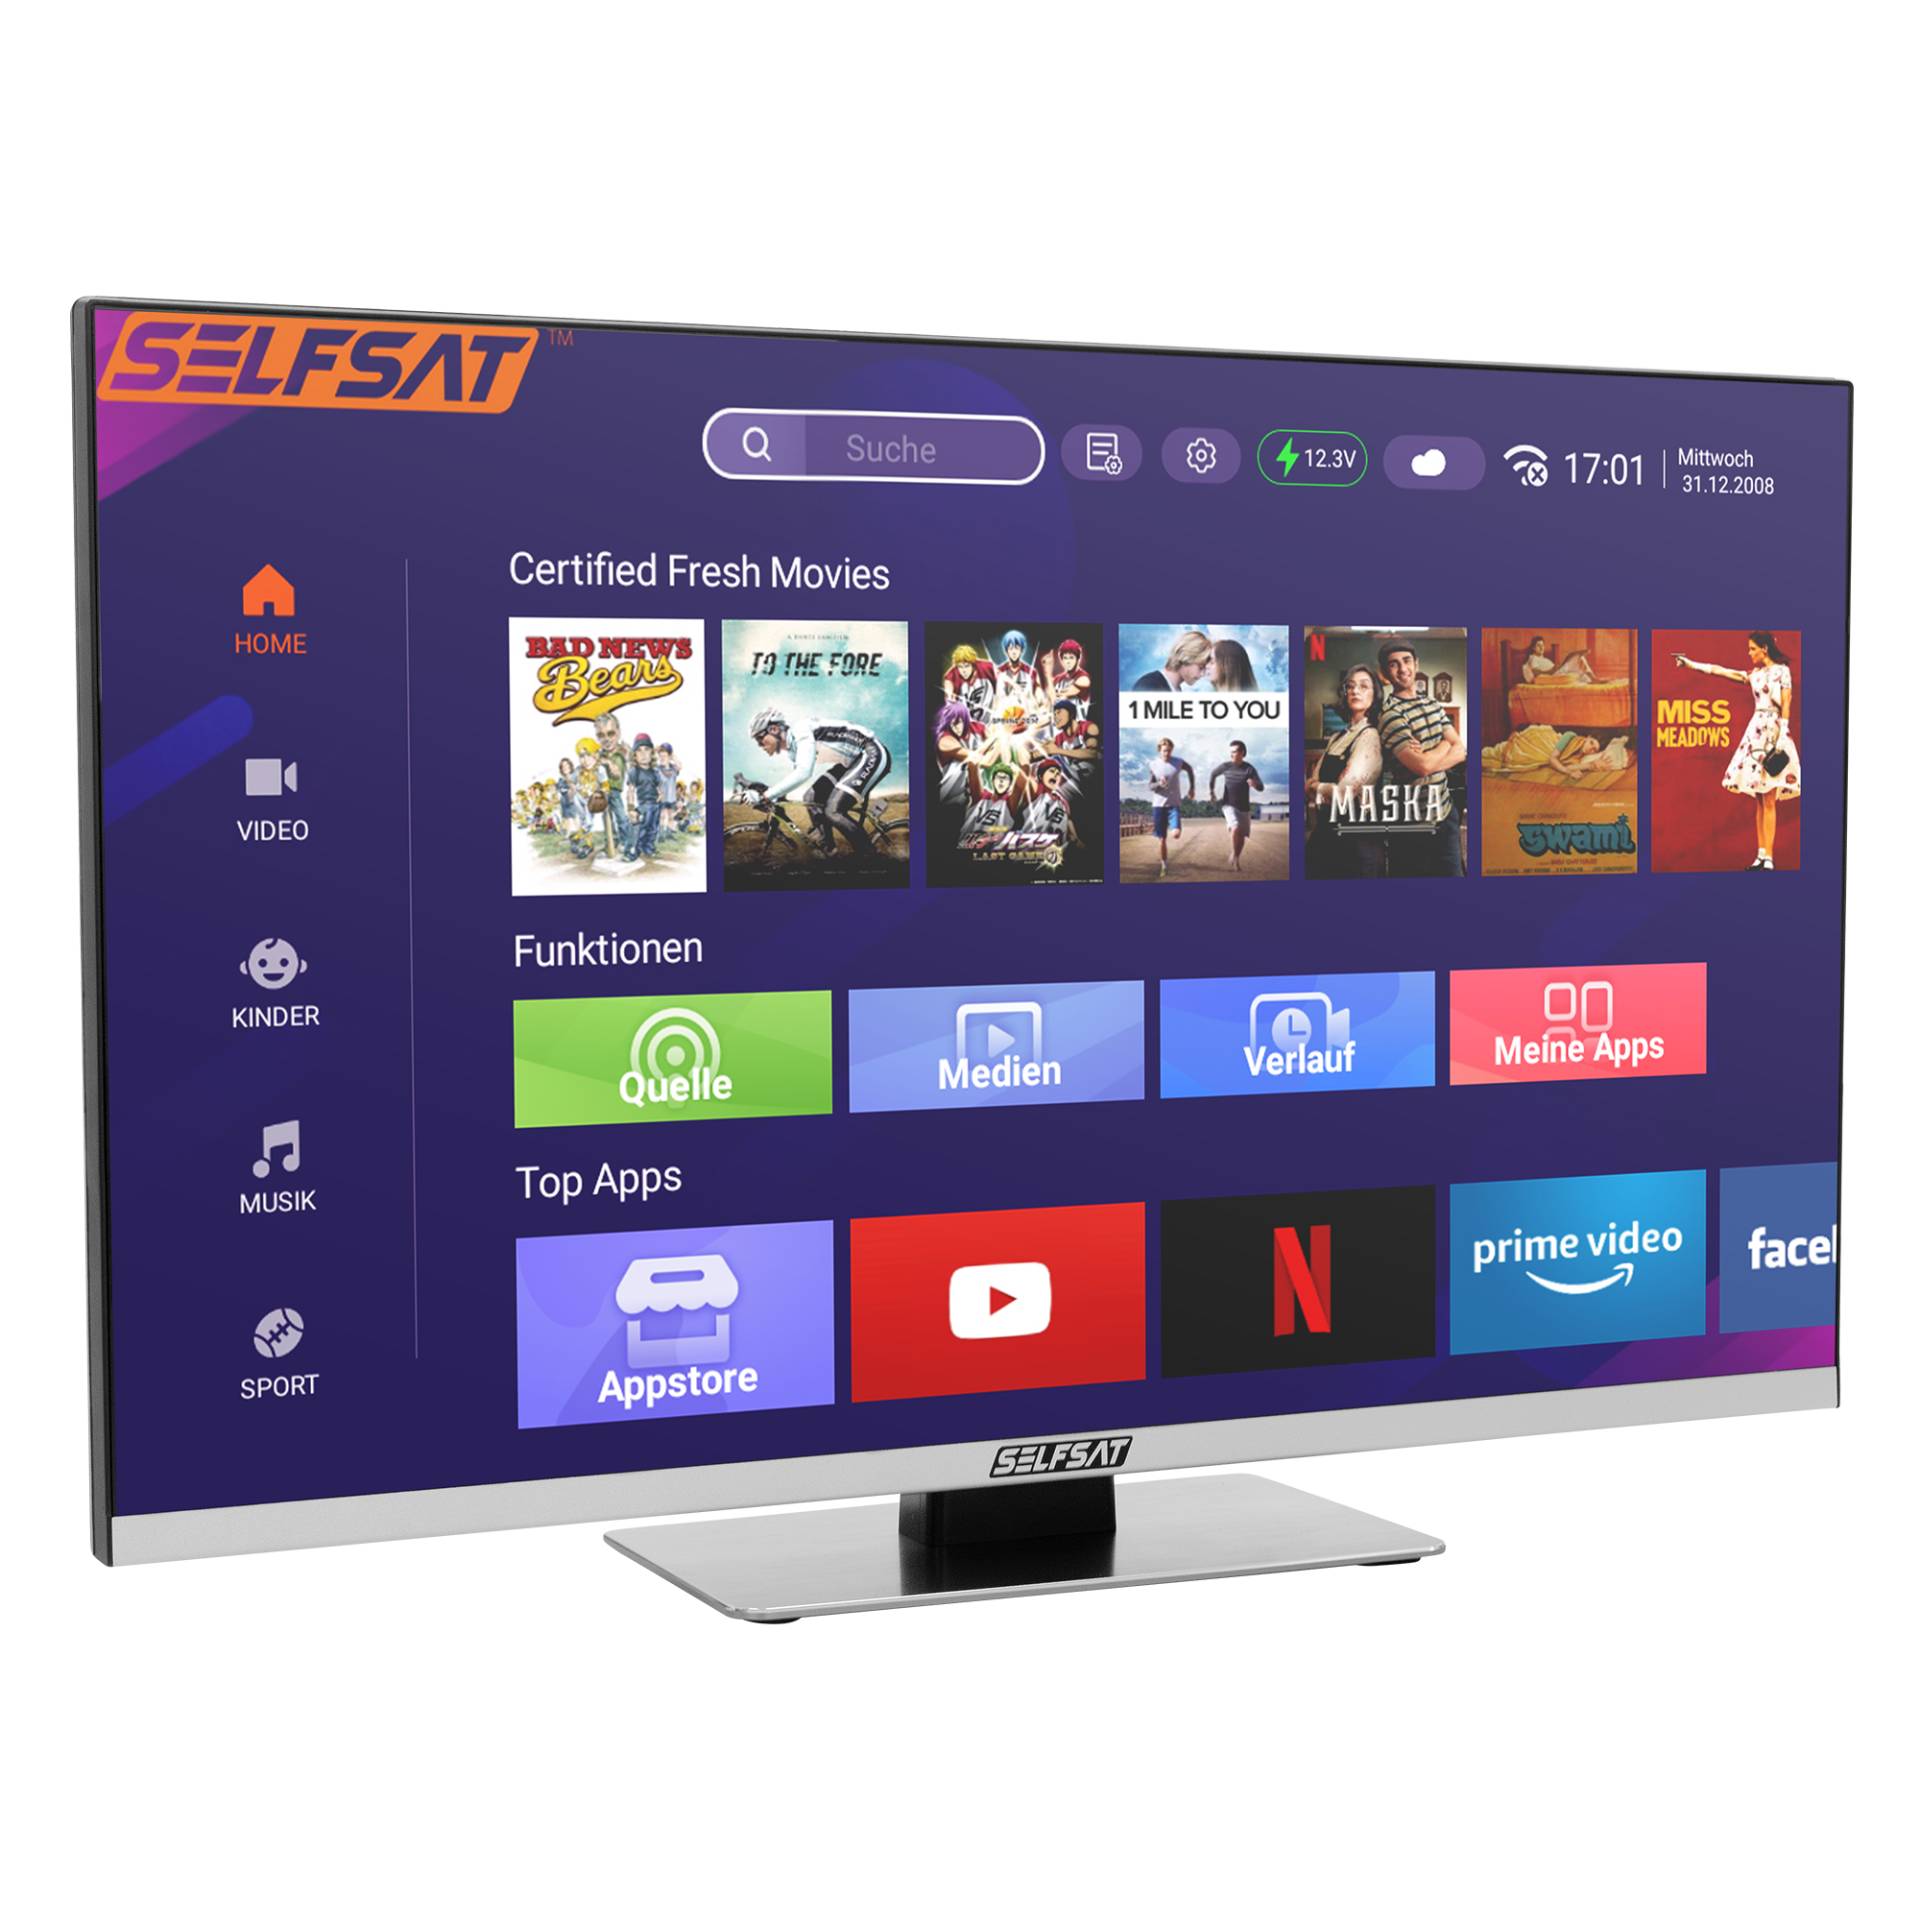 SELFSAT SMART LED TV 1260 (60cm/24") rahmenloser TV inkl. DVB-S2/C/T2 HD Tuner mit WLAN u. Bluetooth von Selfsat